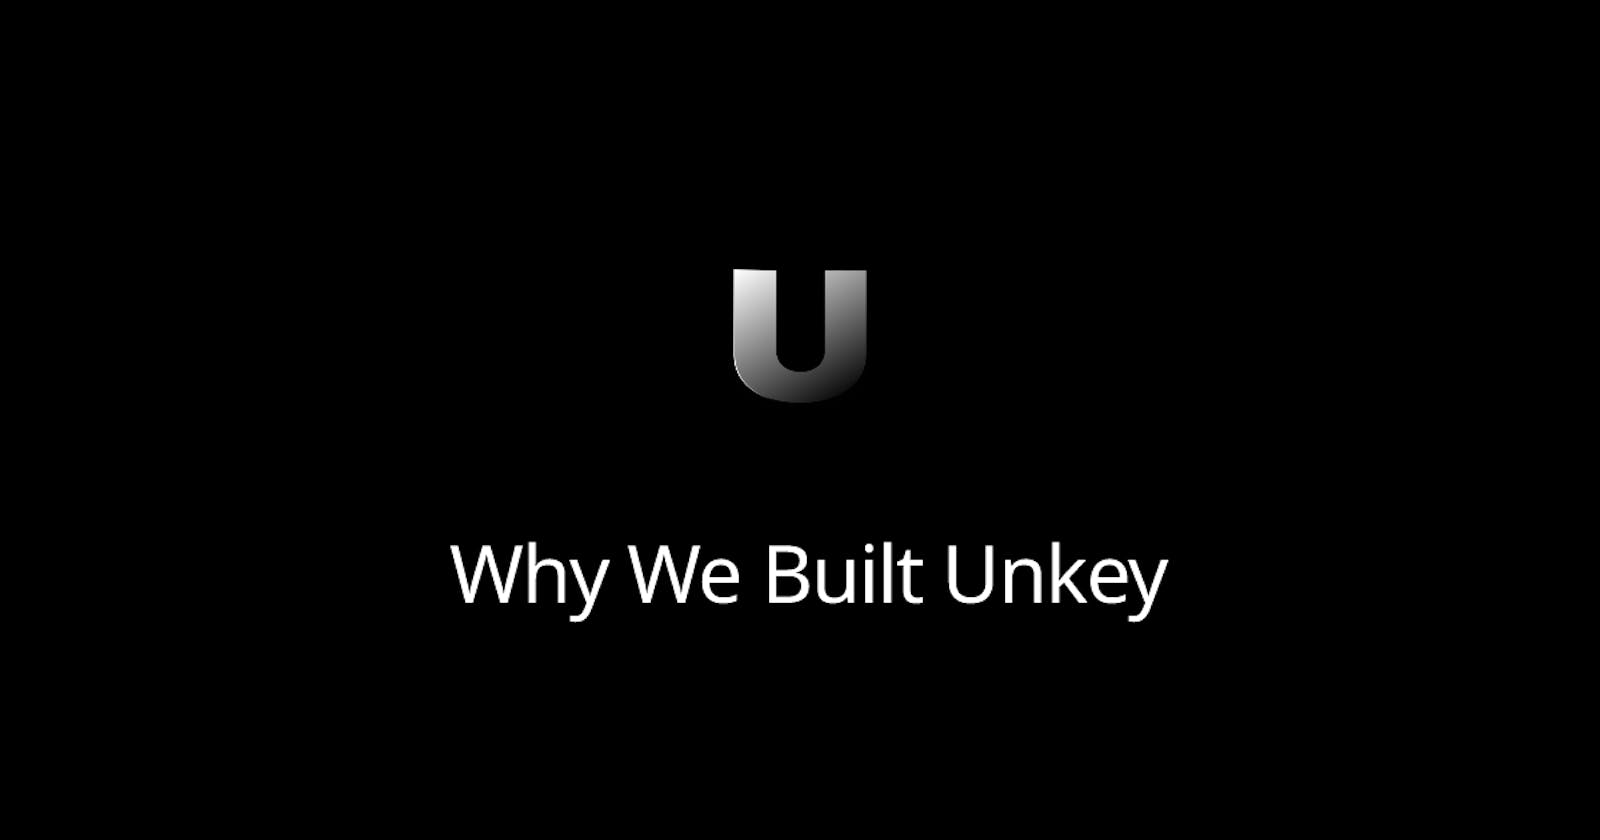 Why we built Unkey